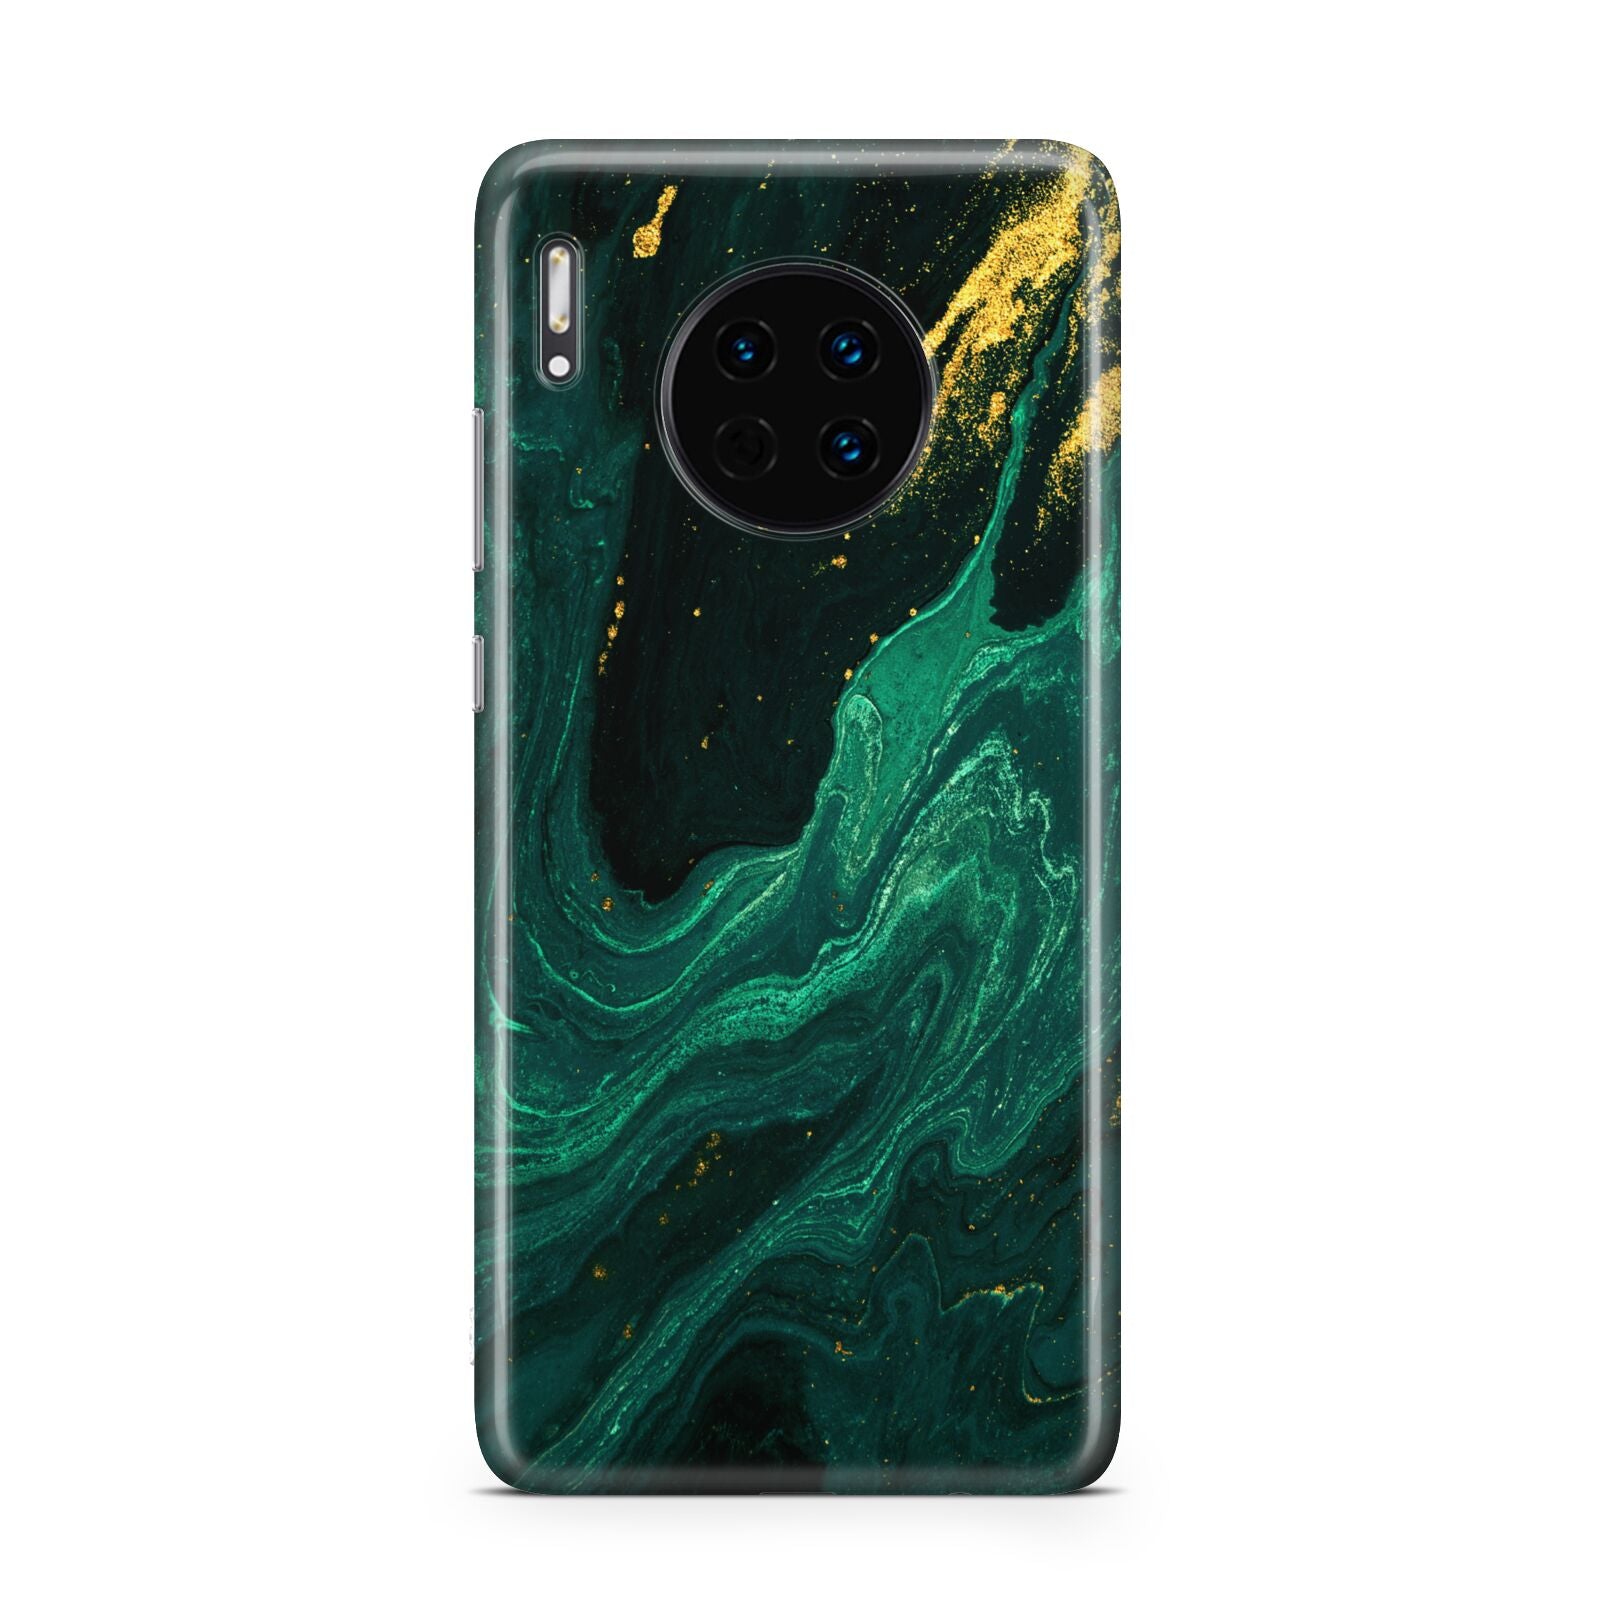 Emerald Green Huawei Mate 30